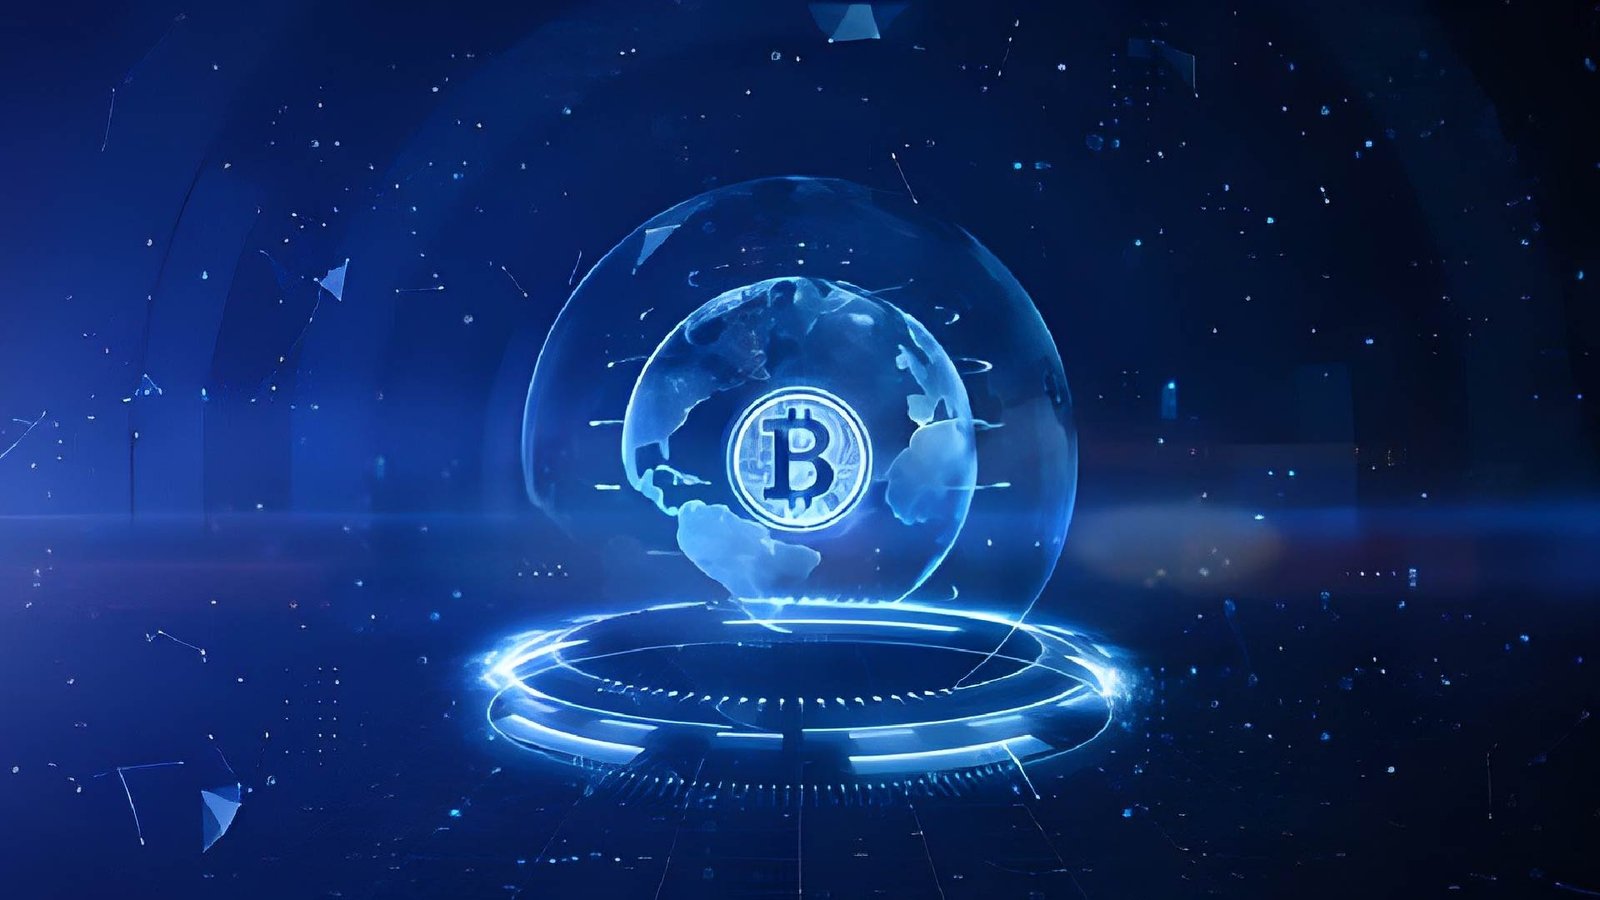 https://www.shutterstock.com/image-illustration/bitcoin-blockchain-crypto-currency-digital-encryption-1896598609